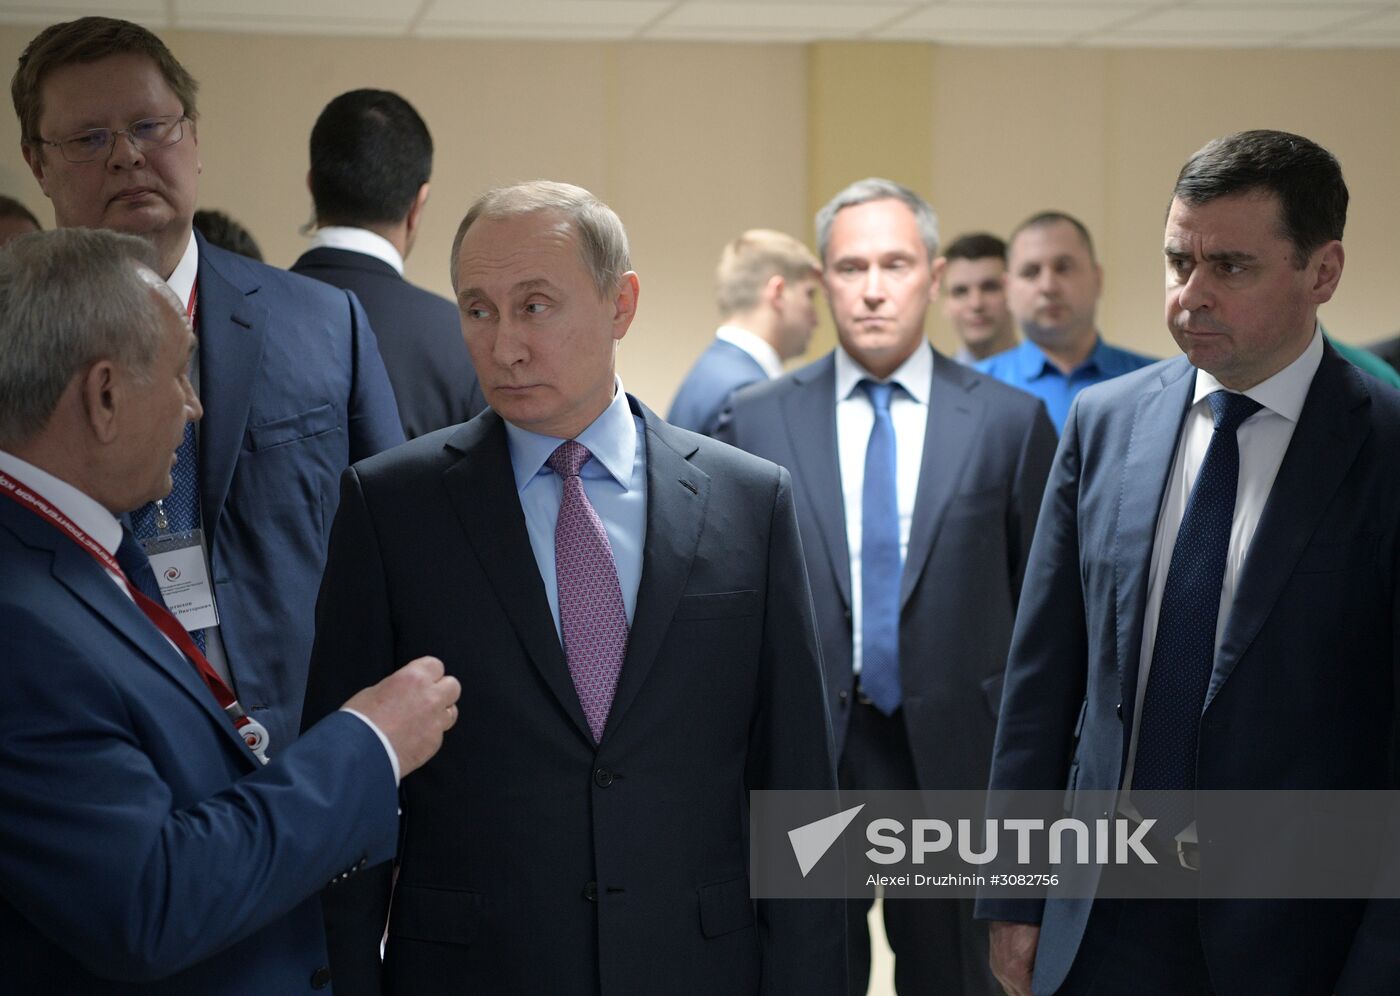 Russian President Vladimir Putin's working trip to Yaroslavl Region